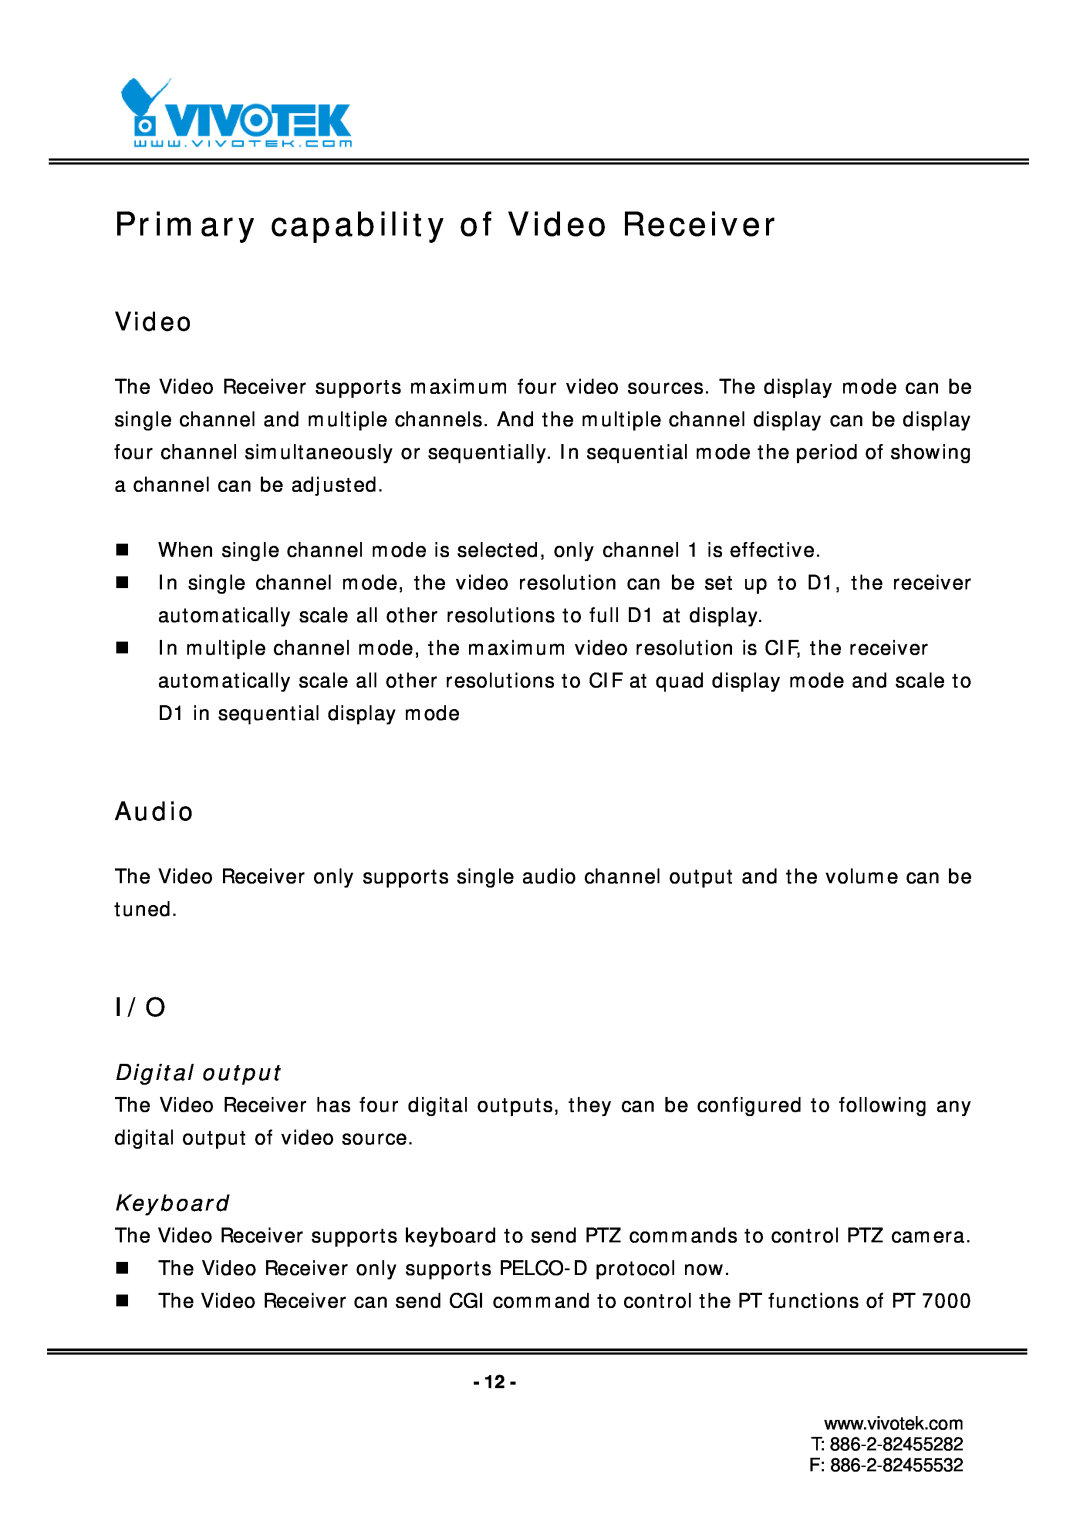 Vivotek RX7101 manual Primary capability of Video Receiver, Audio, Digital output, Keyboard 